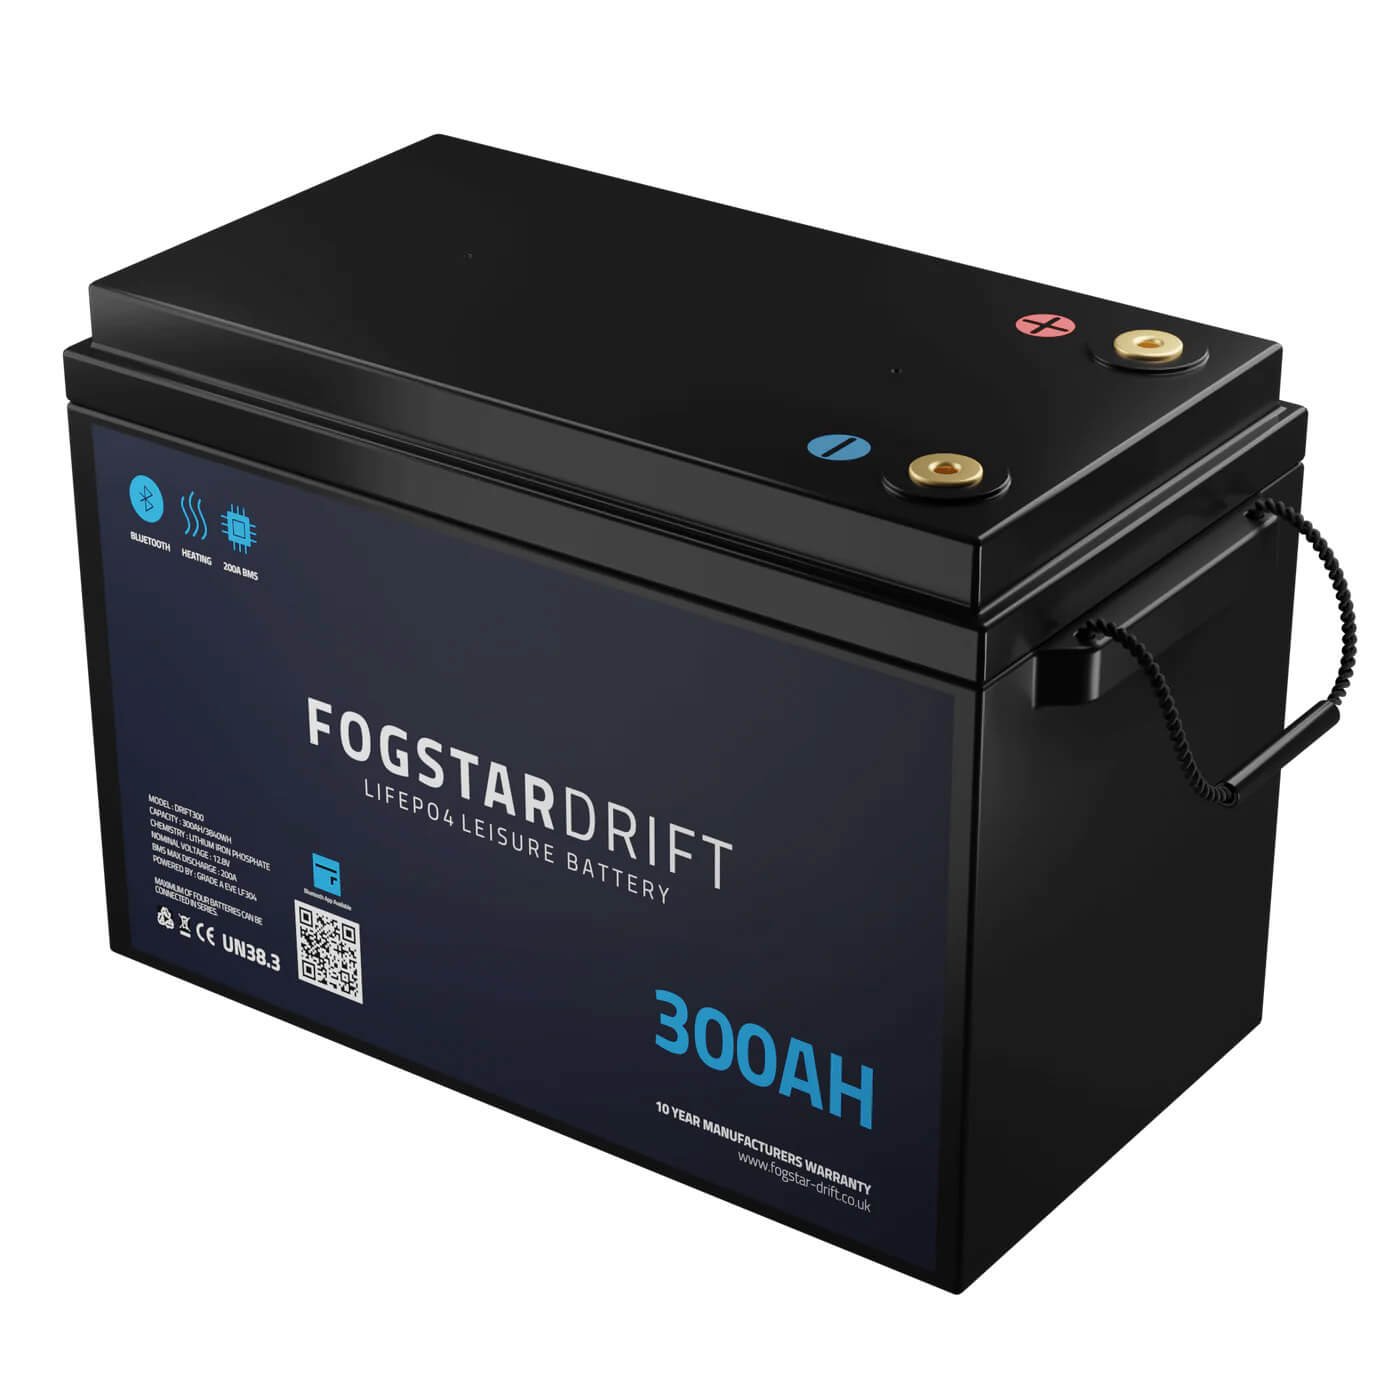 Fogstar Drift lithium leisure battery for campervan